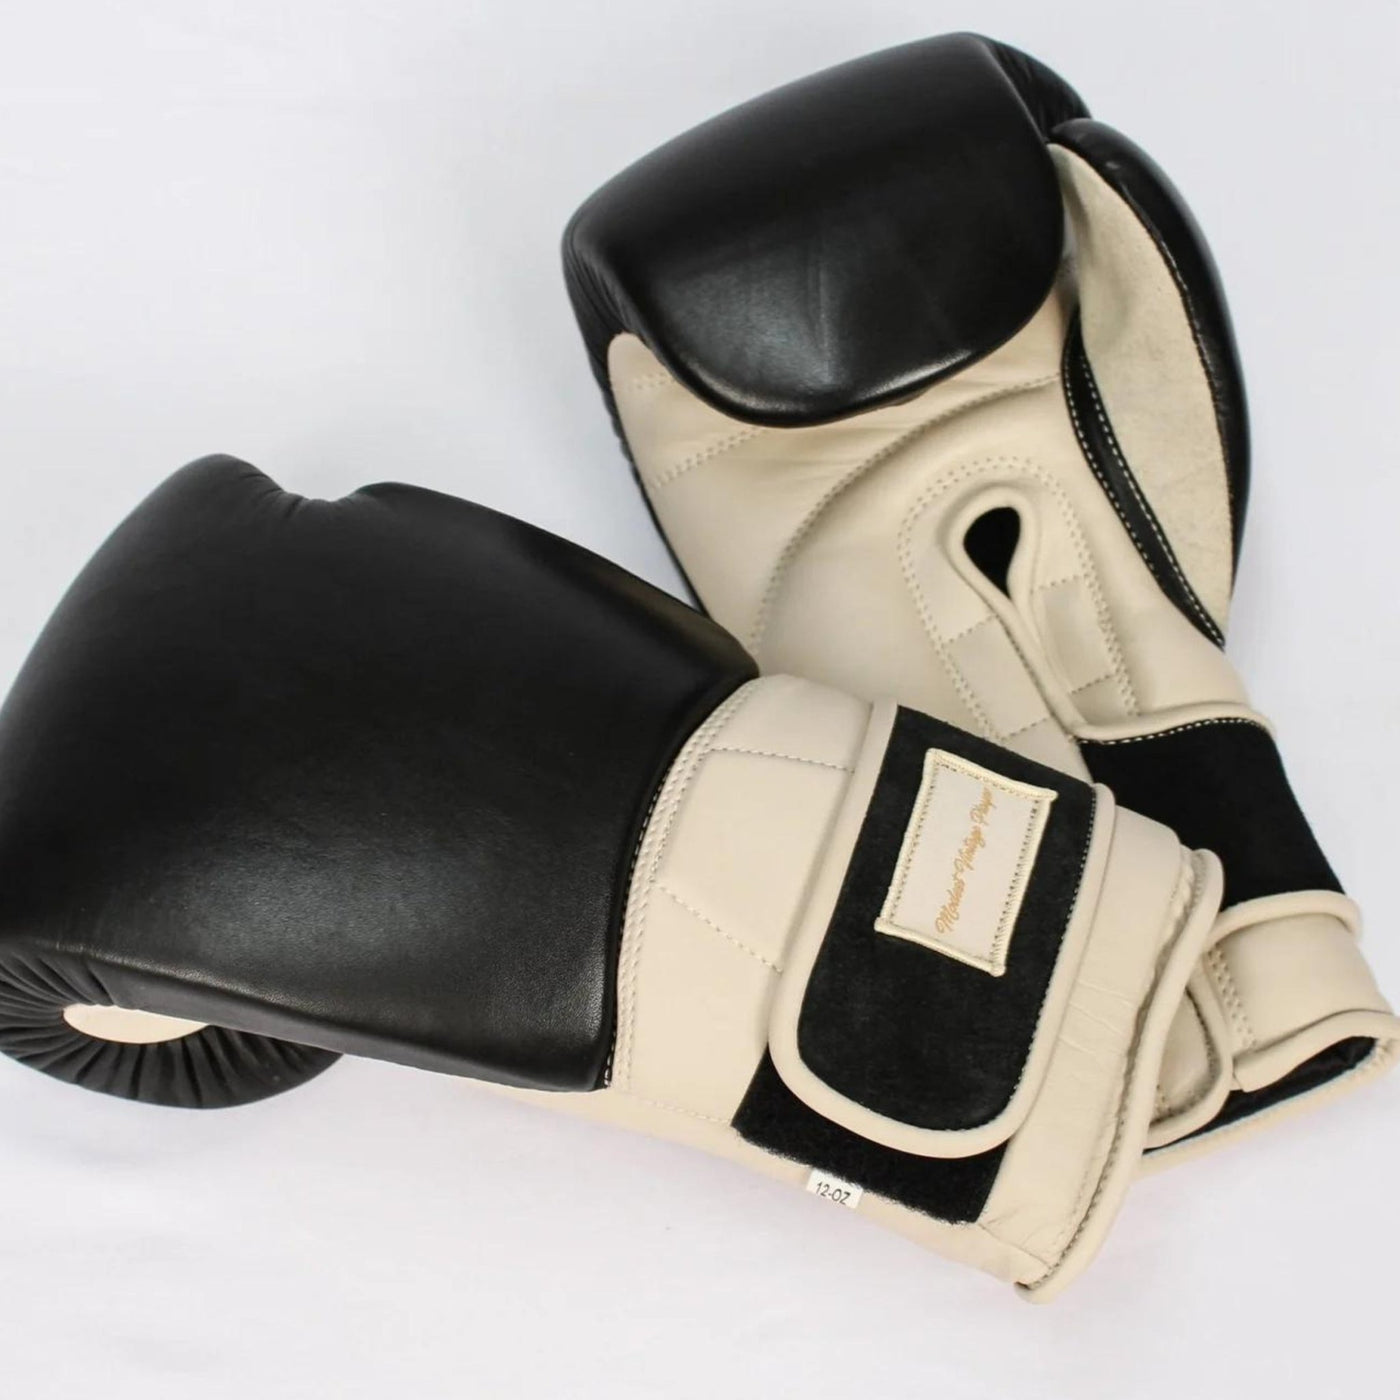 Elite Cream / Black Leather Boxing Gloves (Strap Up) - MODEST VINTAGE PLAYER LTD